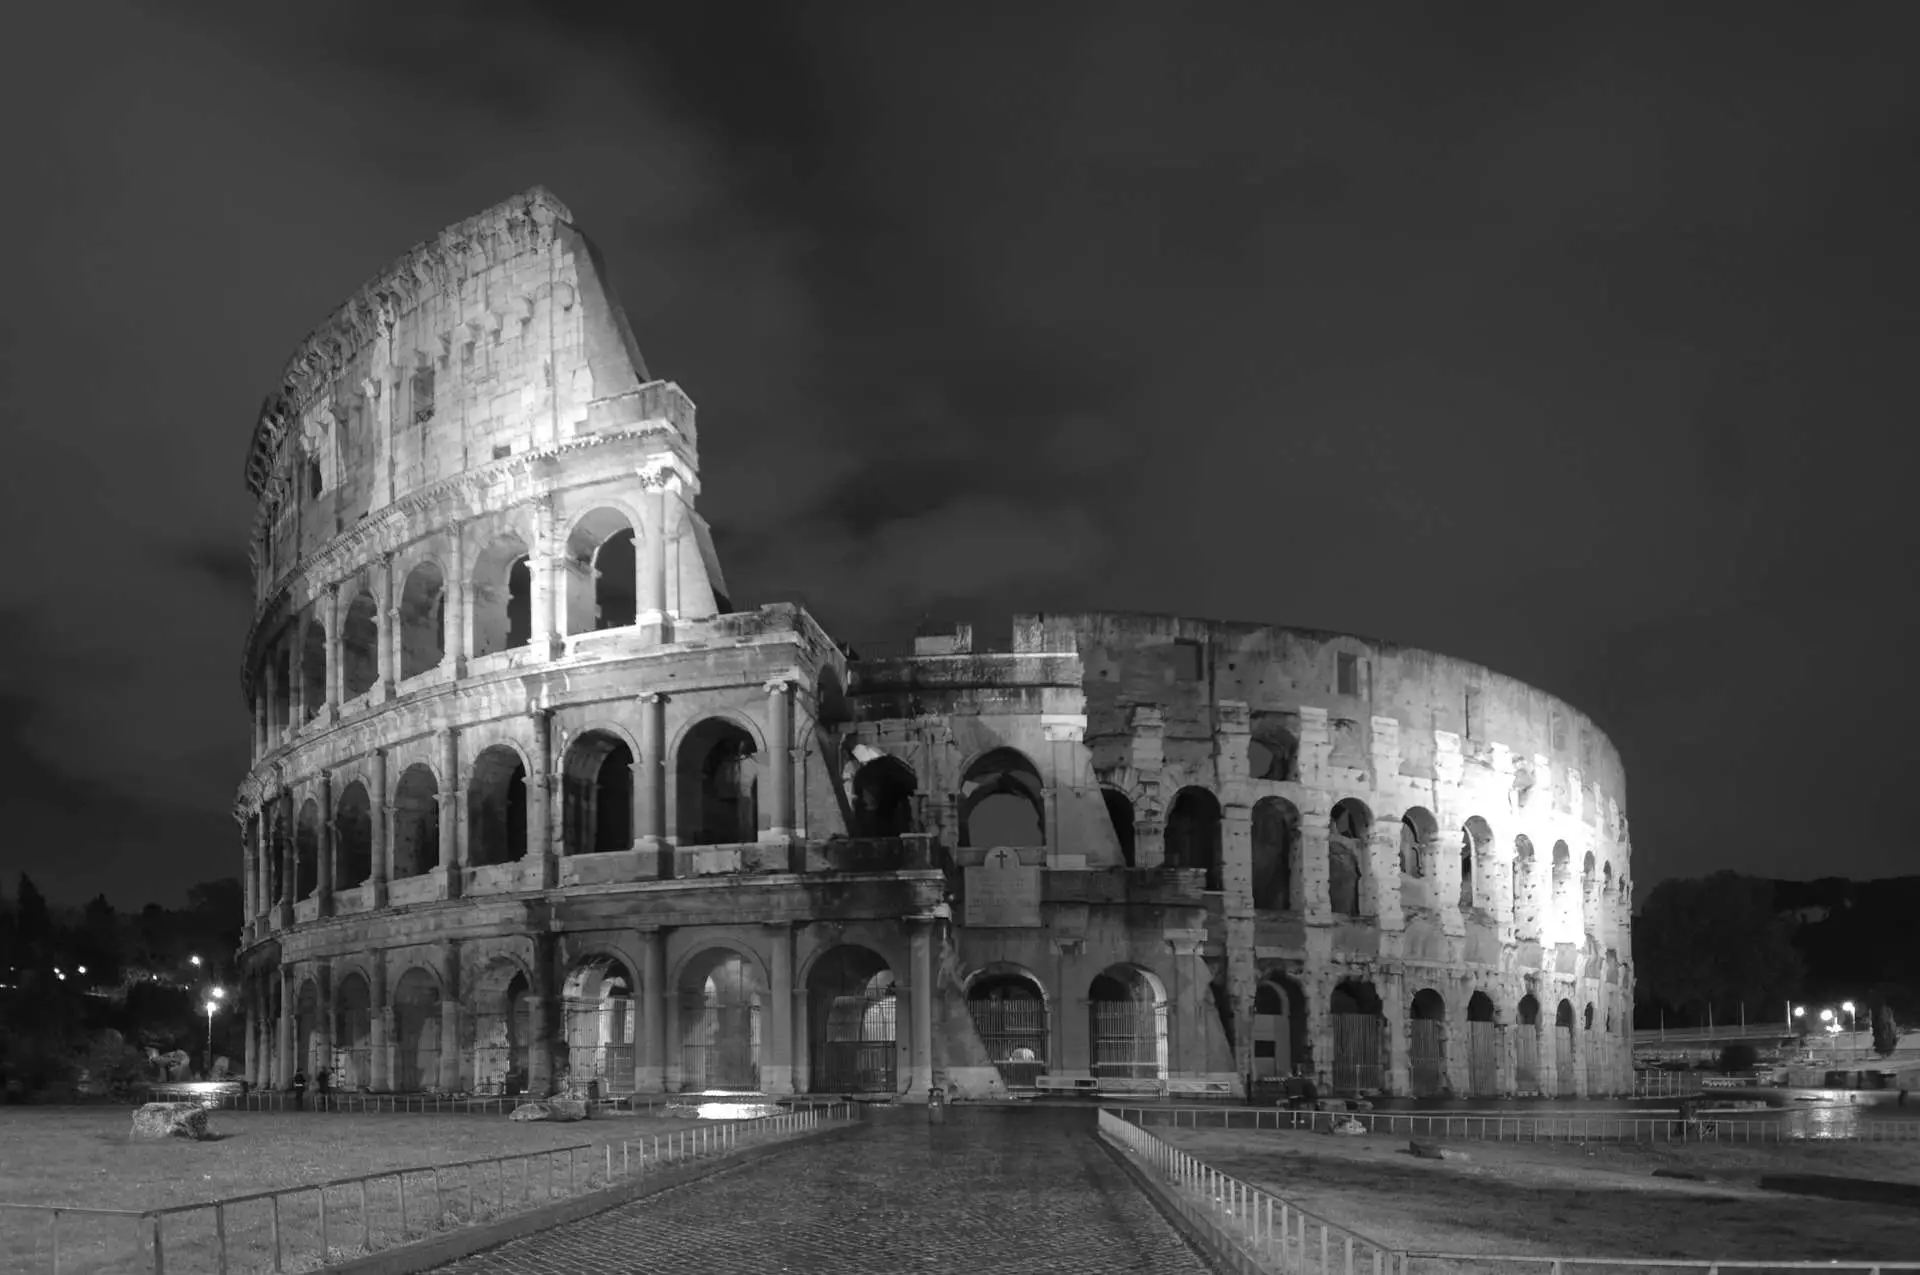 The remain of Colloseum, Rome